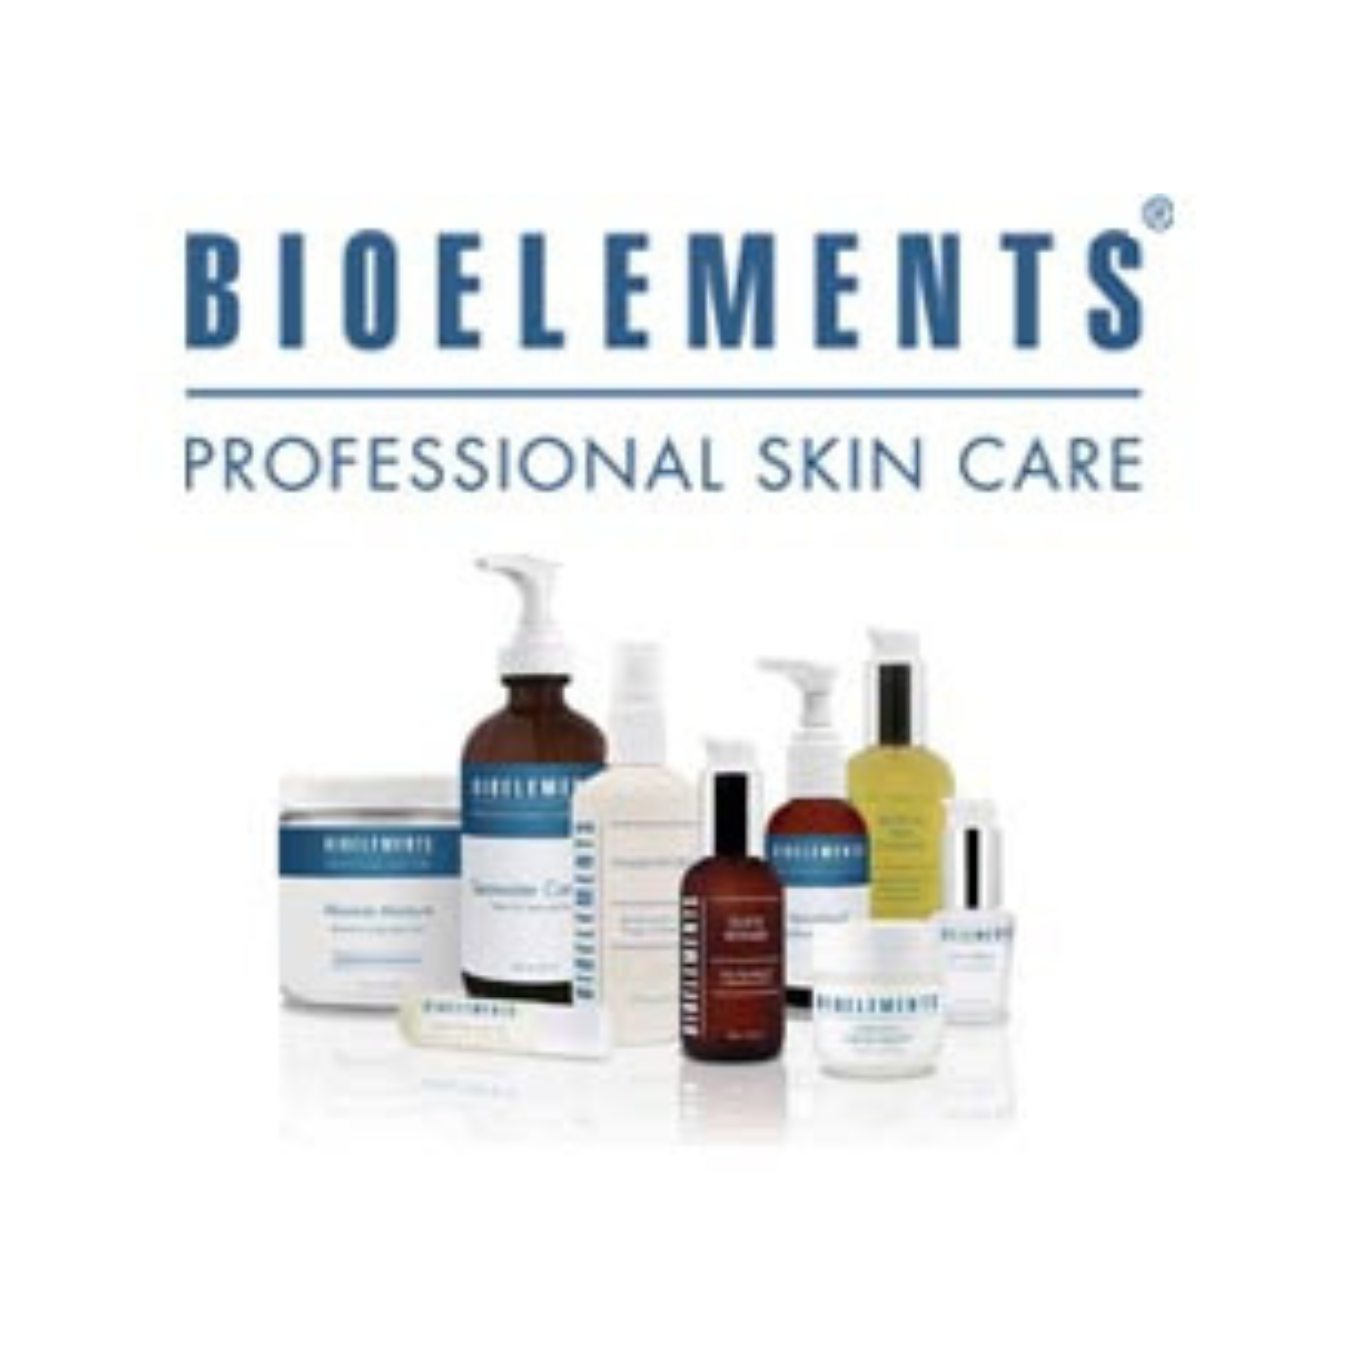 bioelements_professional_skincare.png